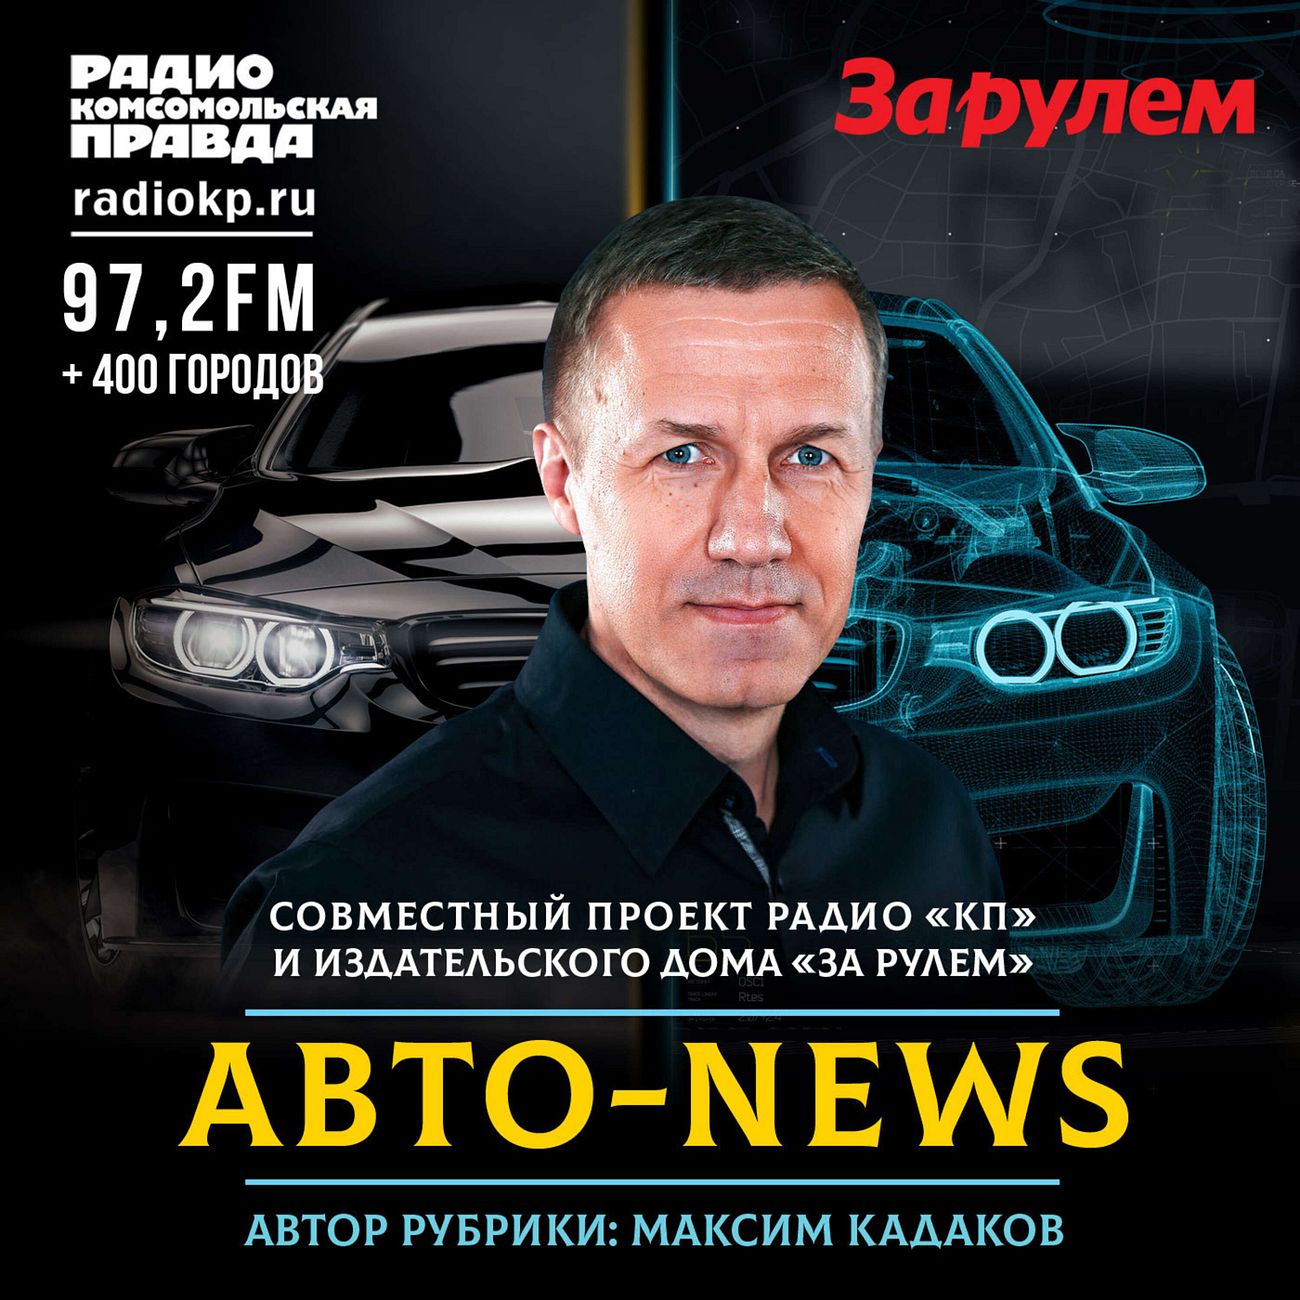 Авто-news